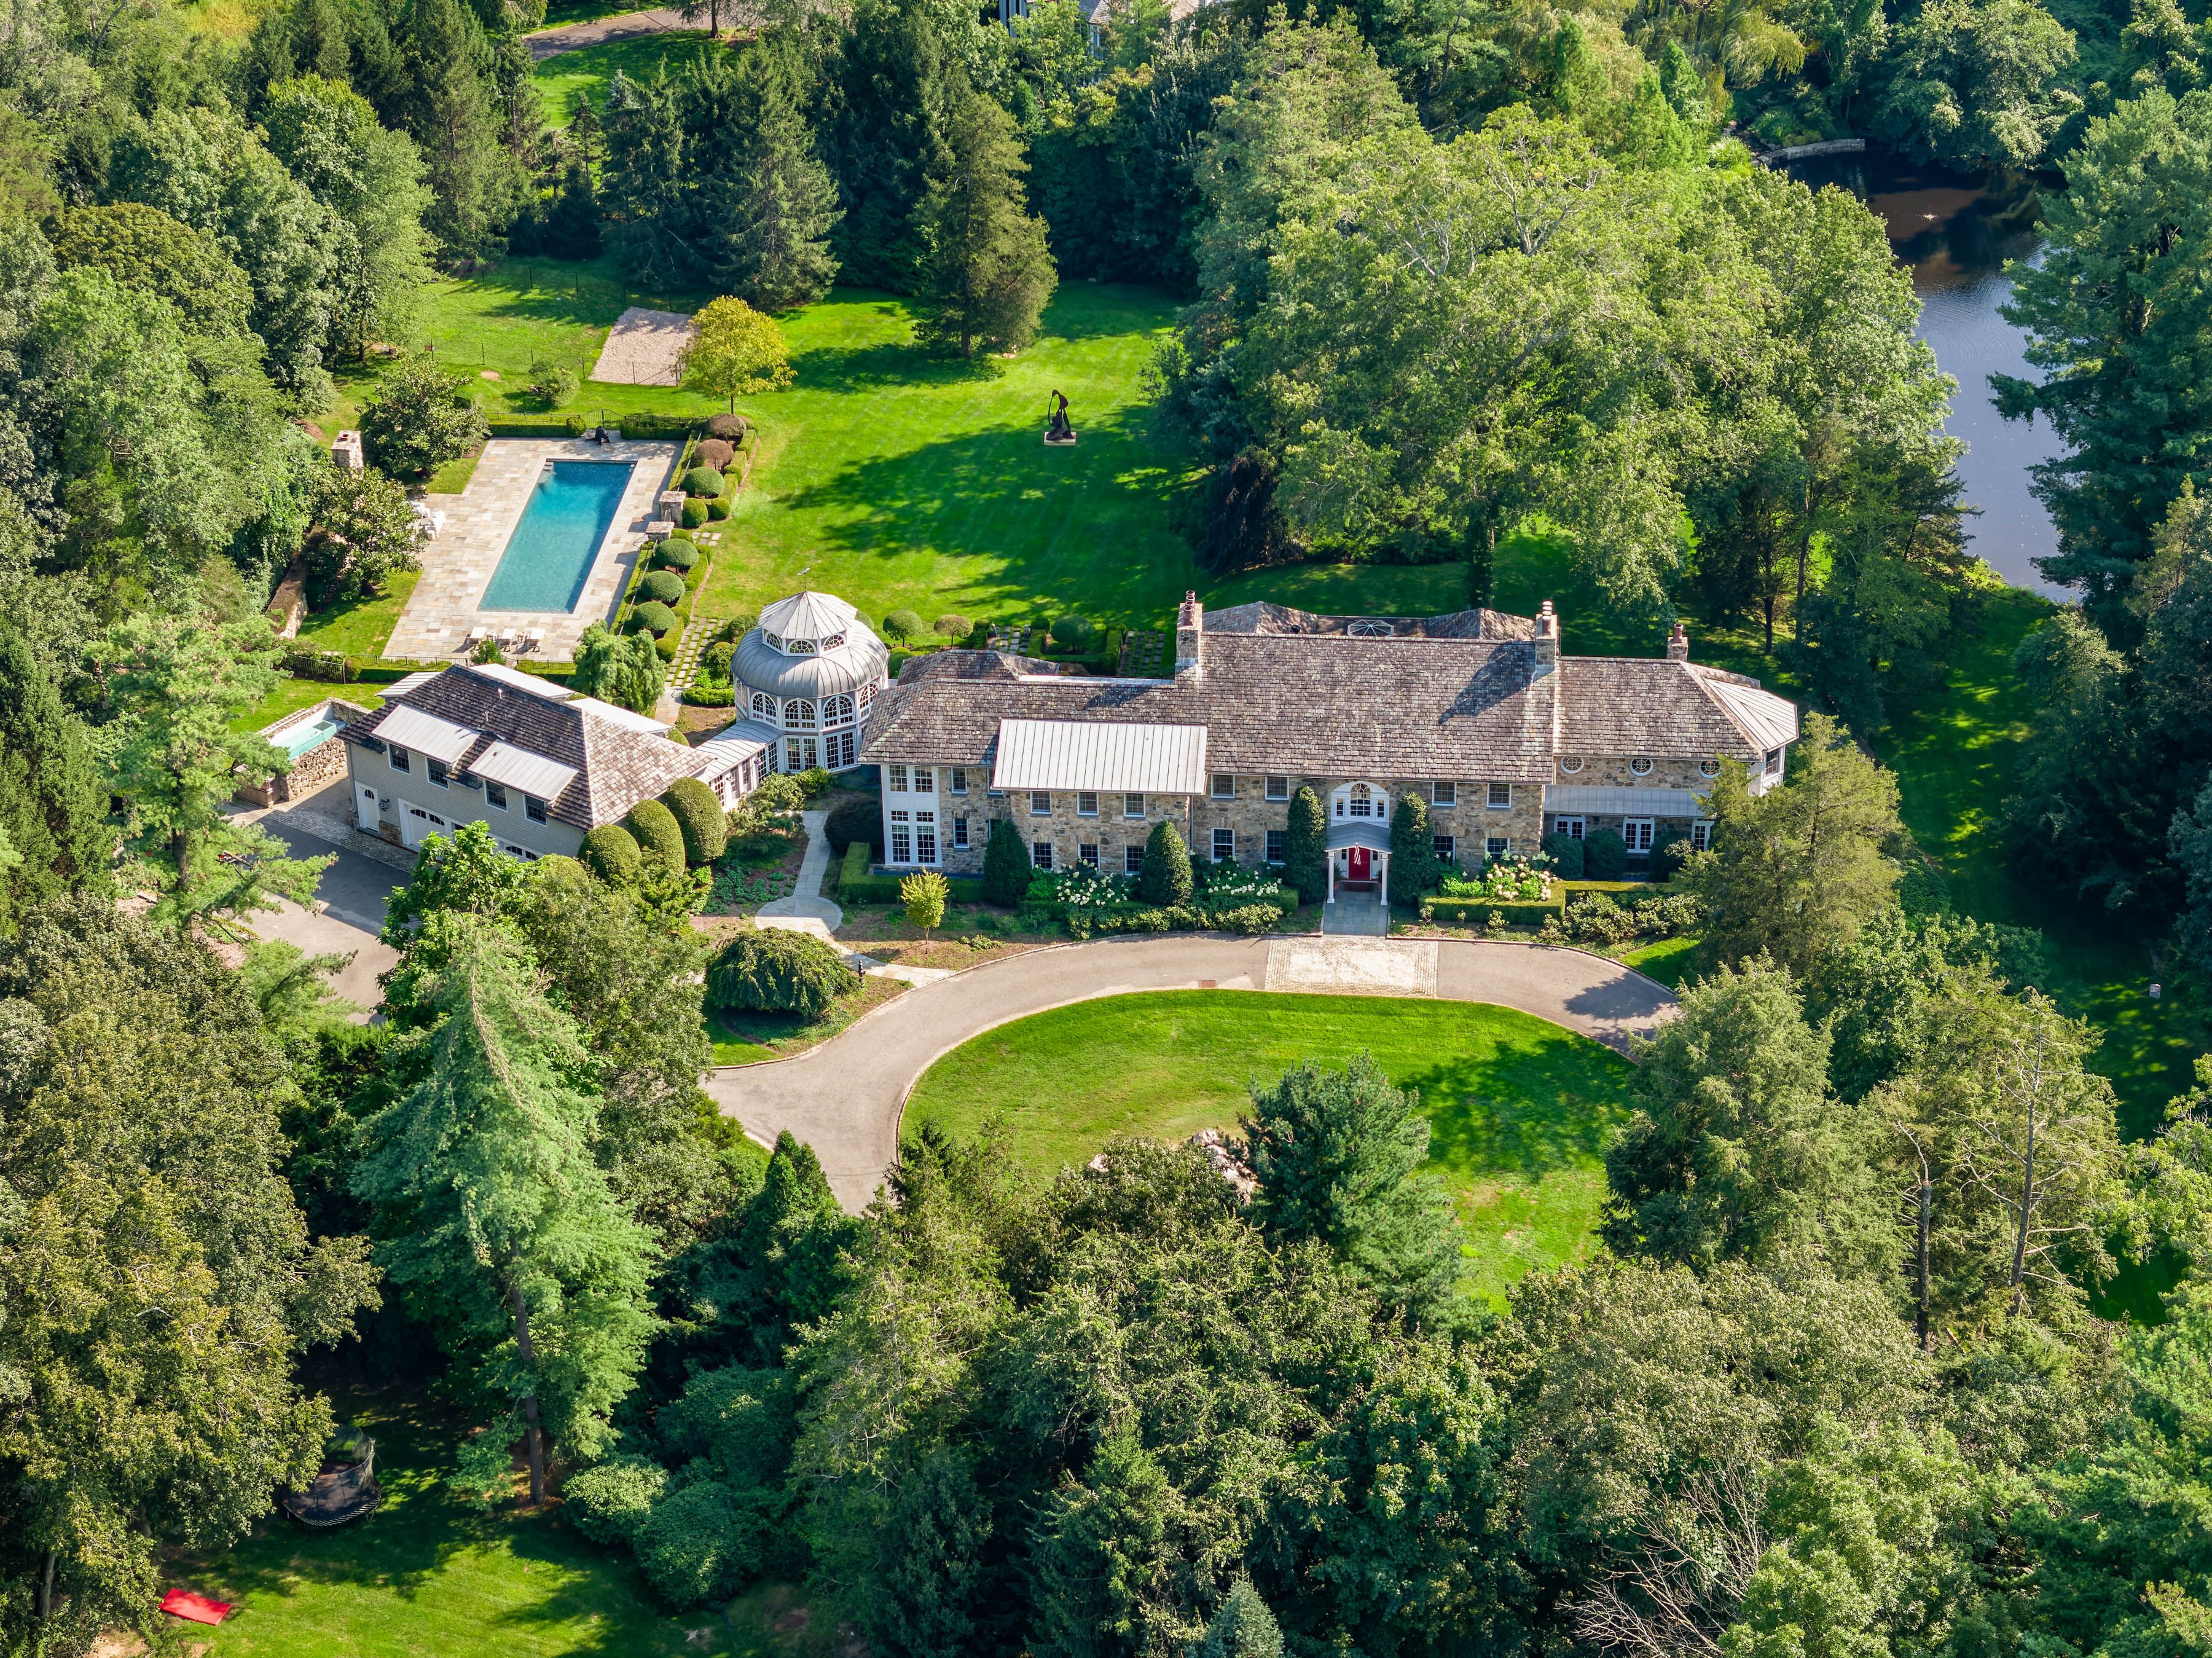 Will Smith, Jada Pinkett Smith Buy Hidden Hills Spec Home